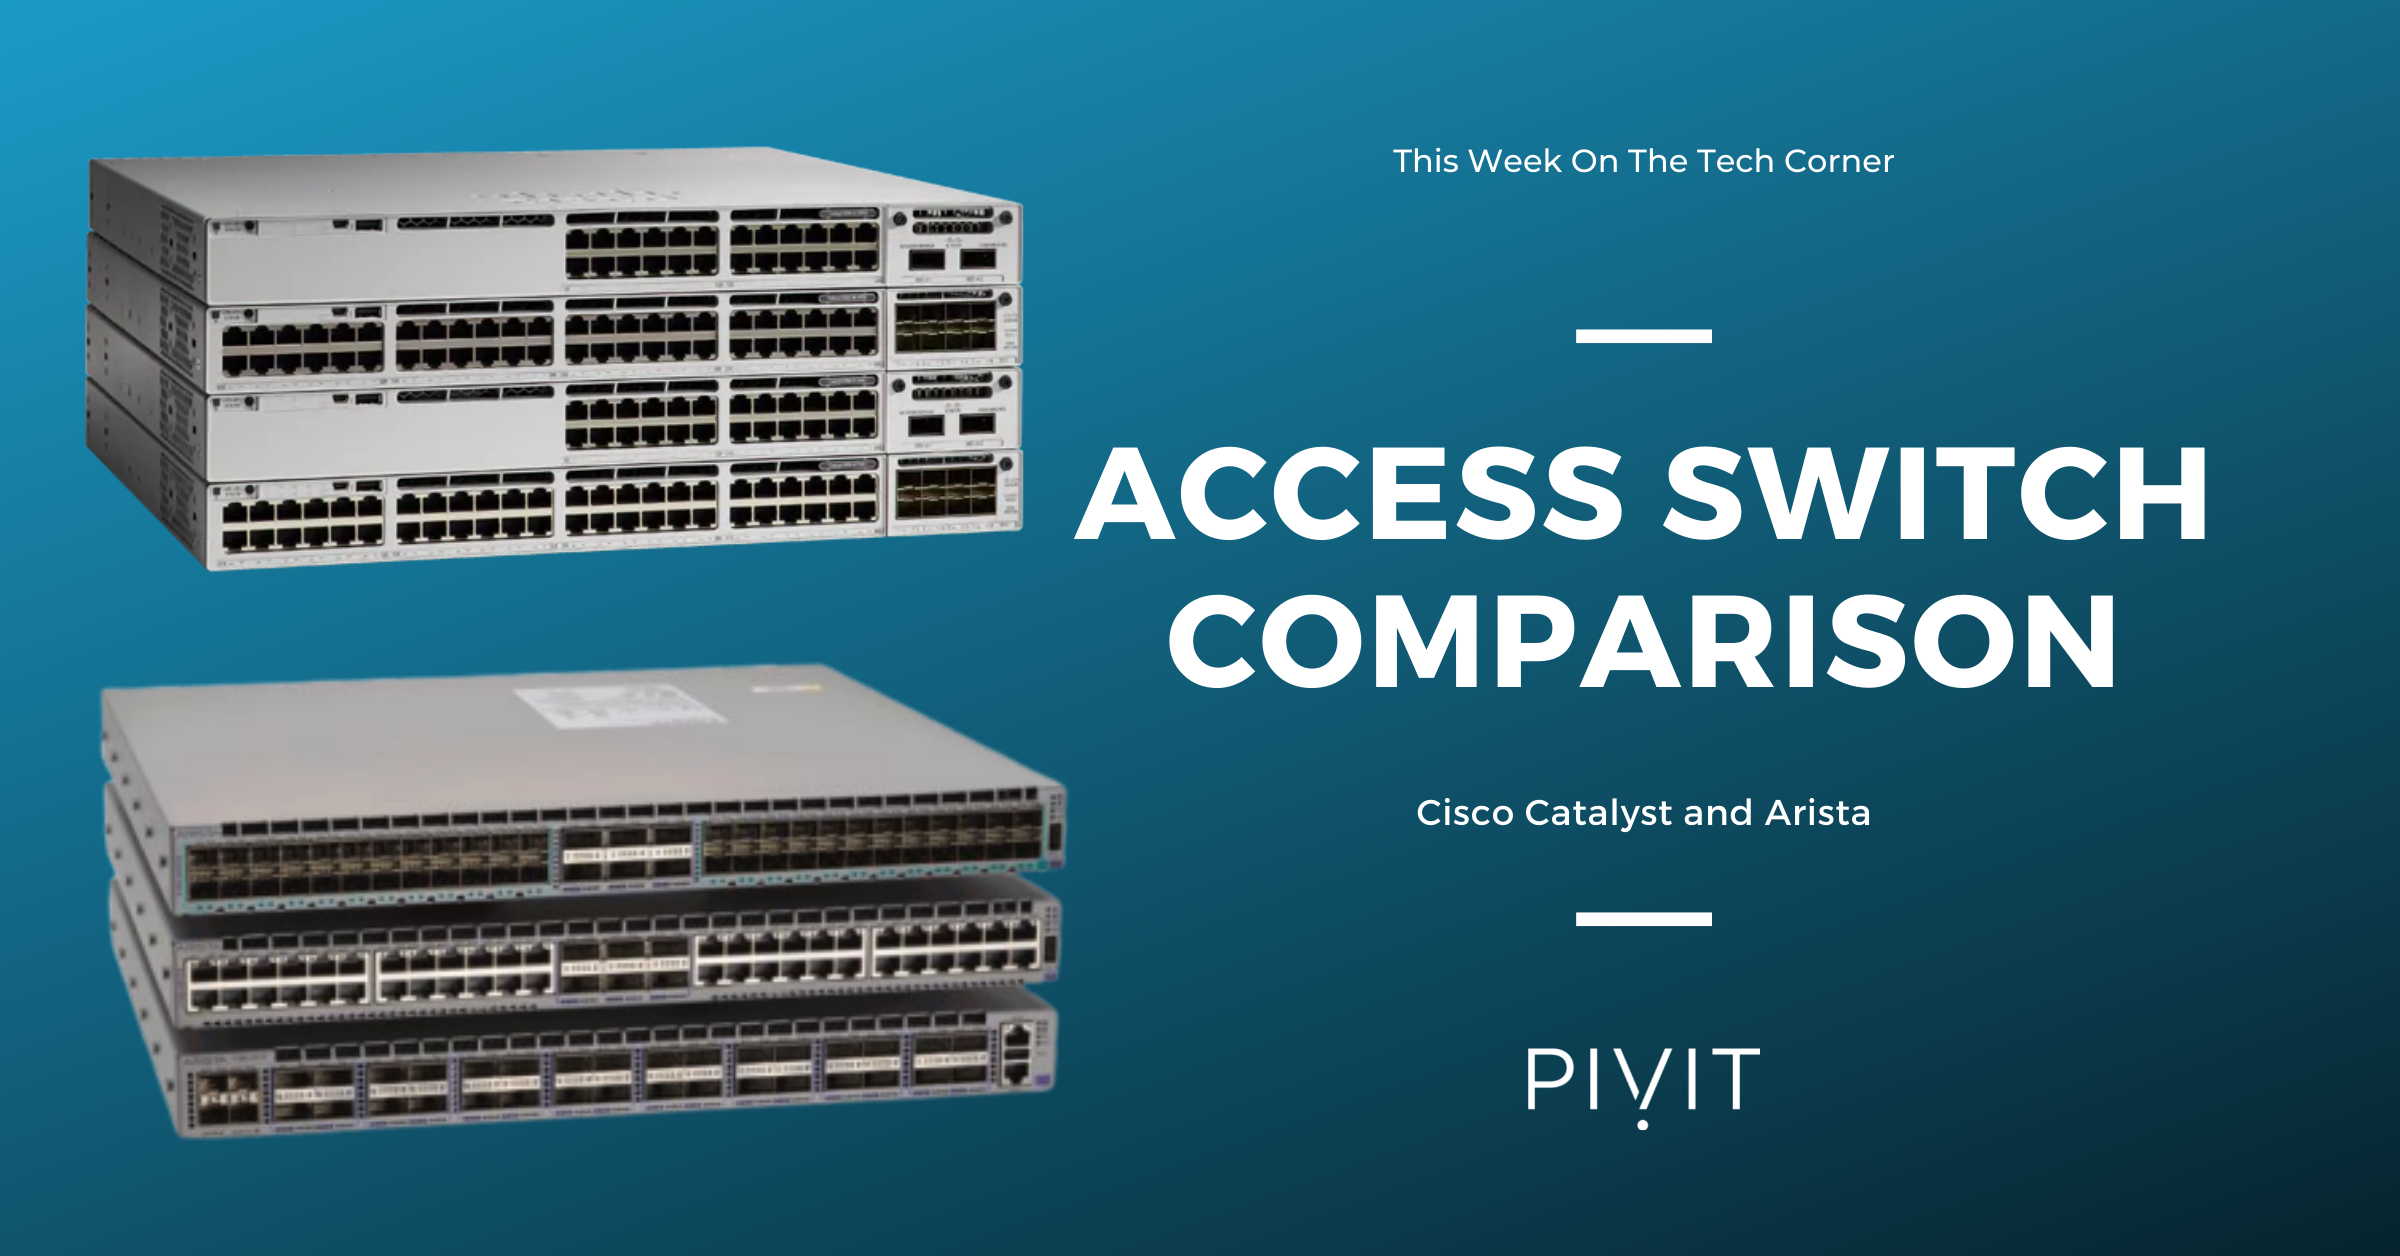 Cisco Catalyst and Arista access switches comparison